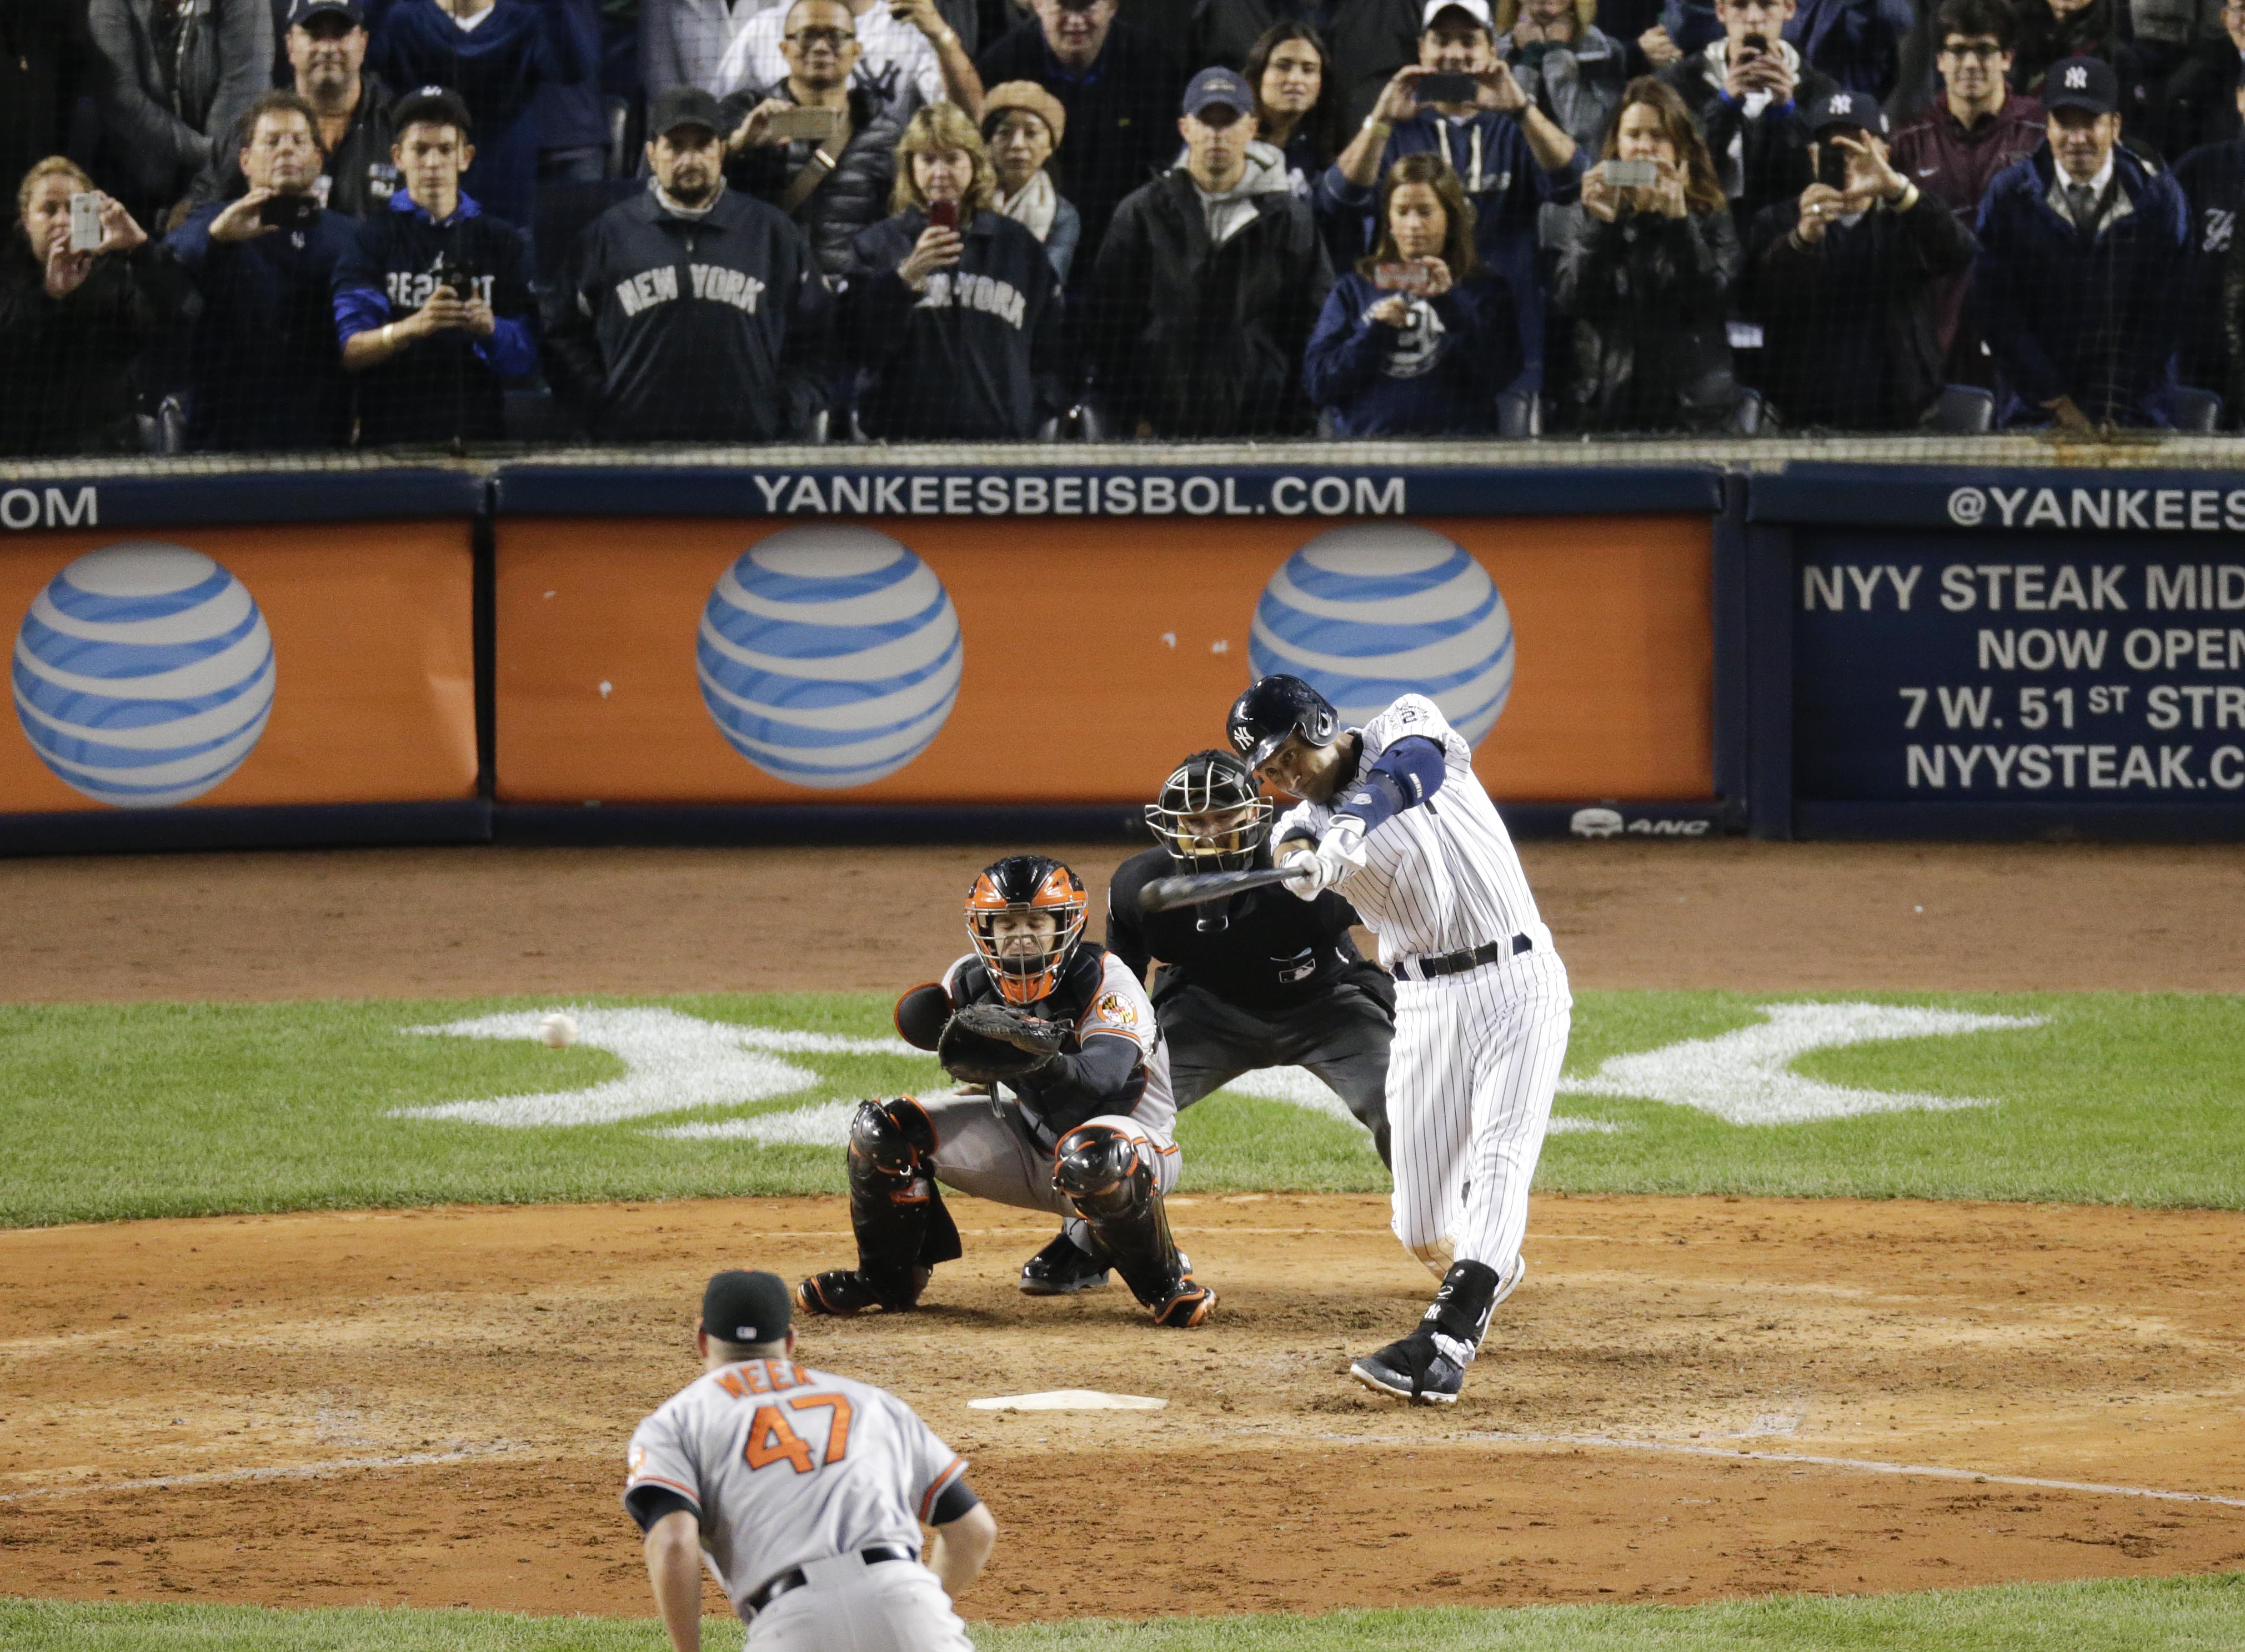 Derek Jeter ends Yankee Stadium farewell with game-winning hit